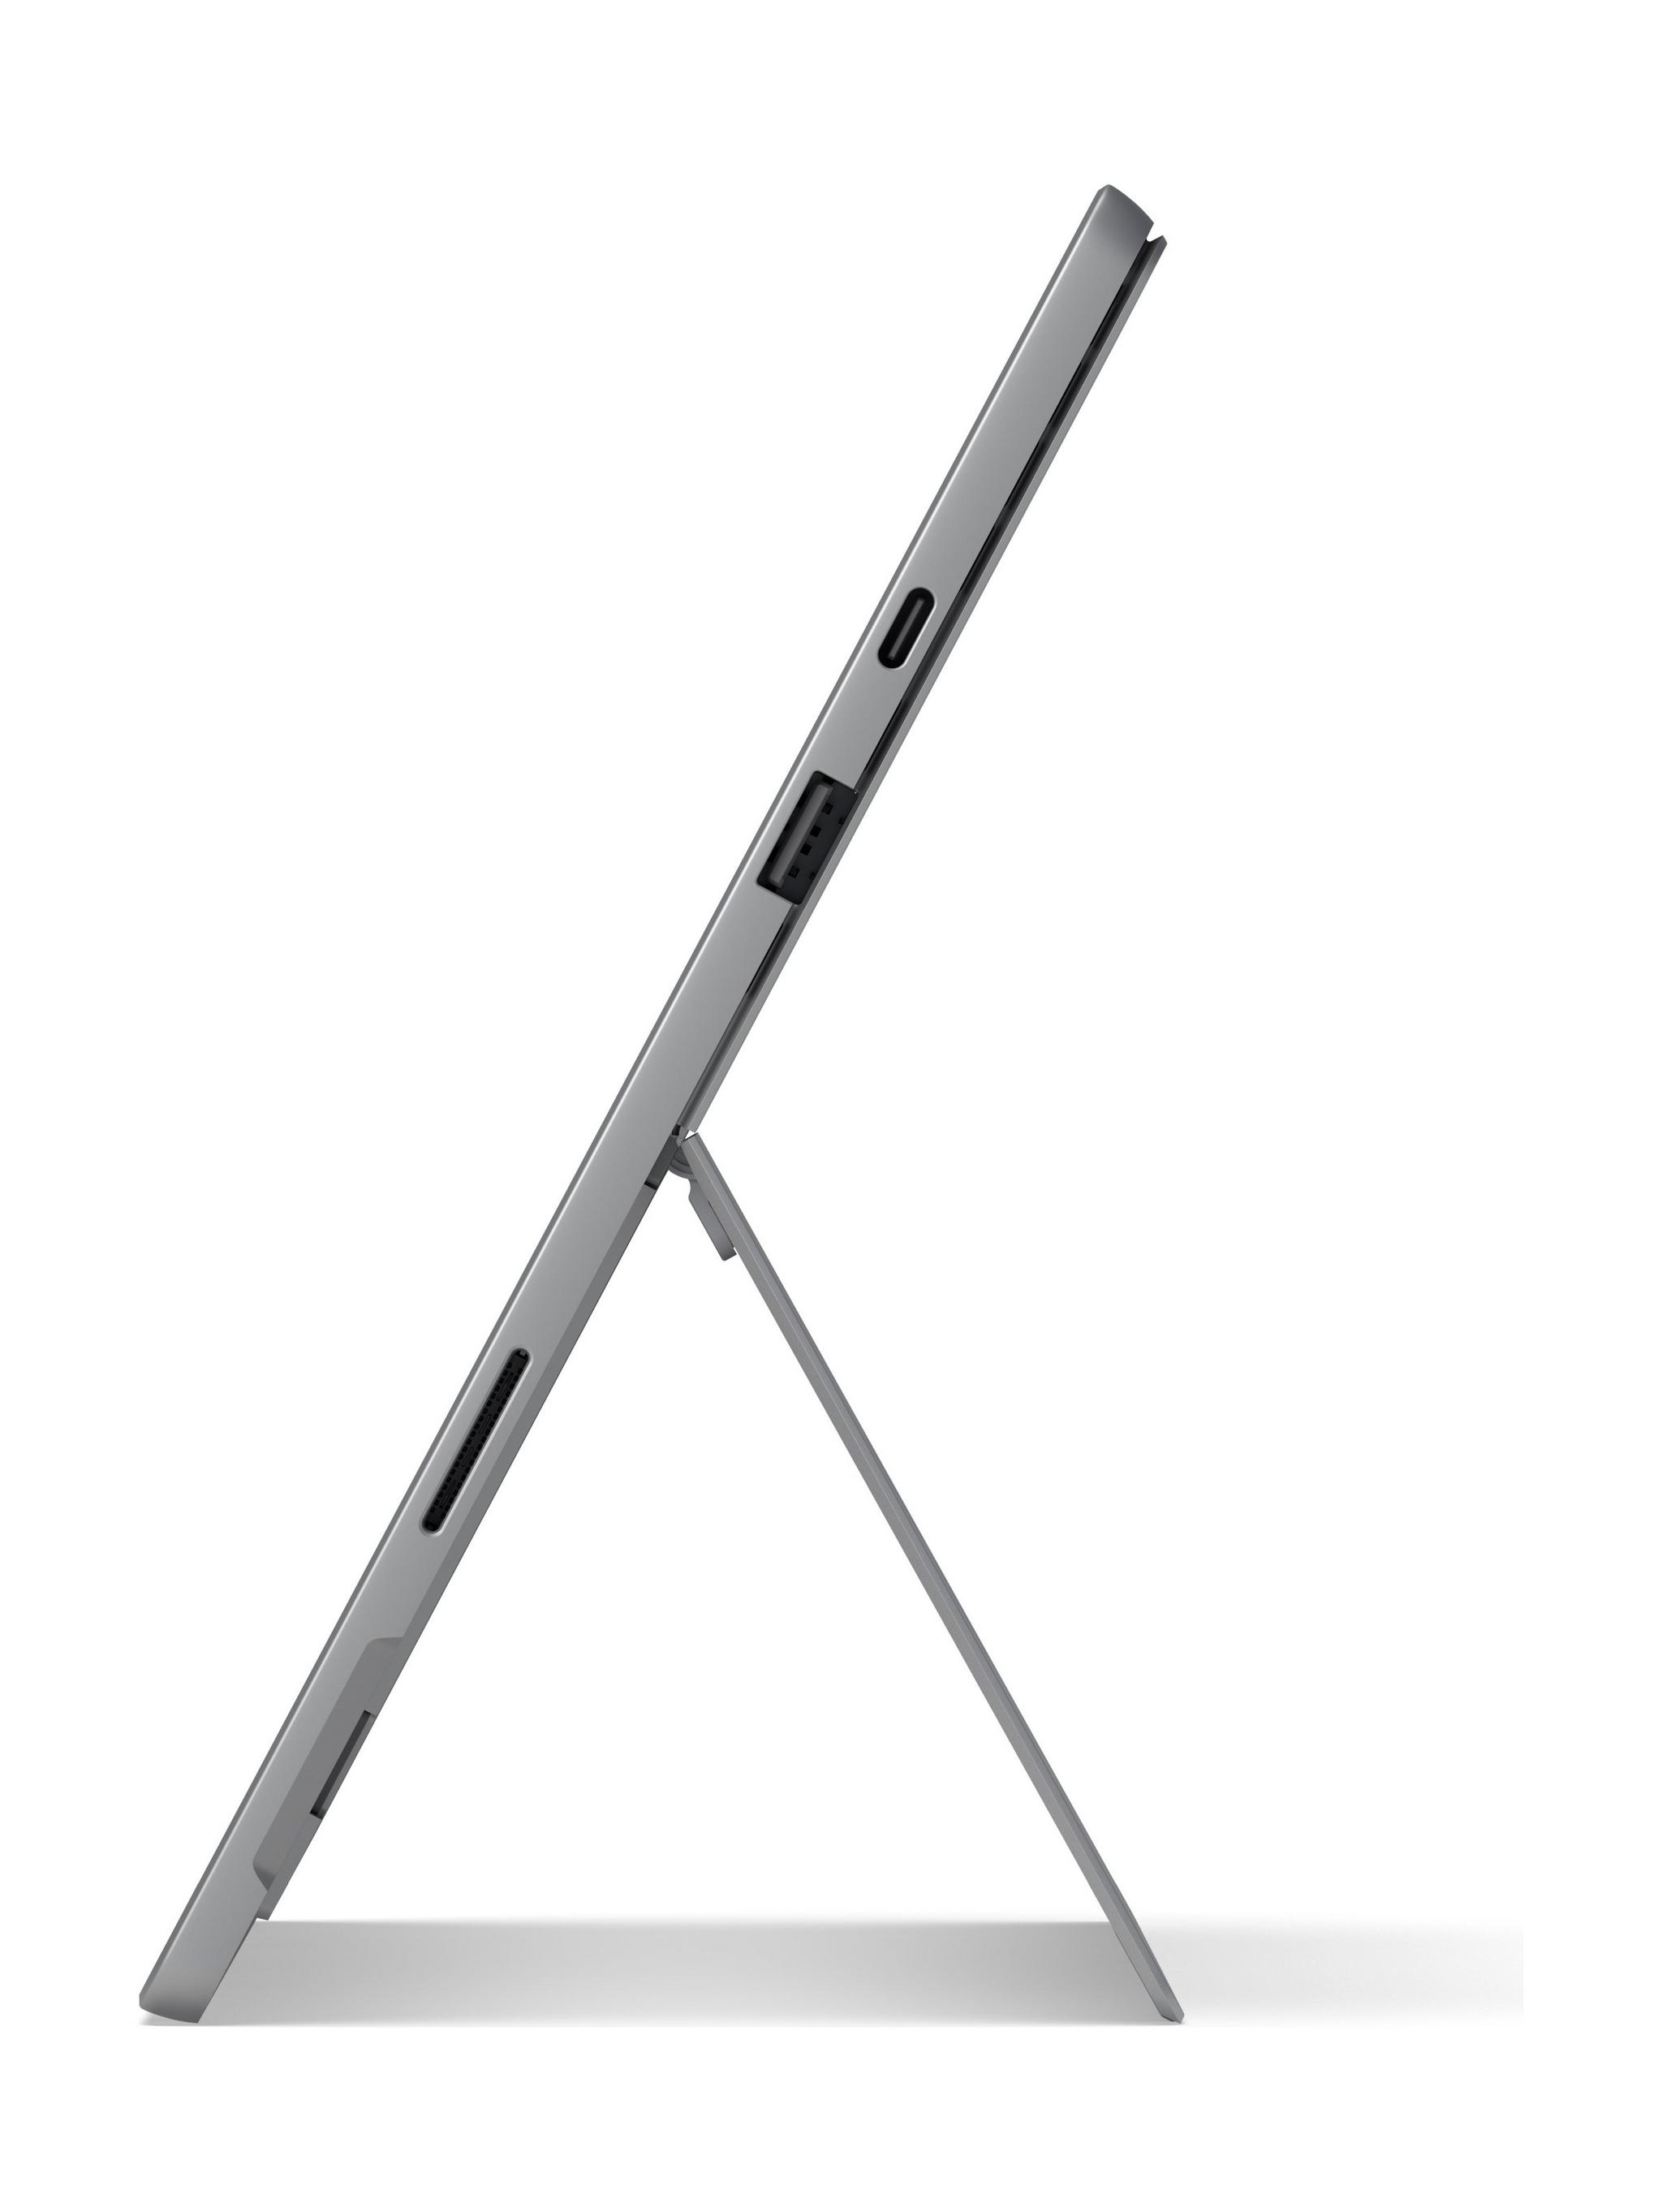 Microsoft Surface Pro 7 Intel Core i7 16GB RAM 1TB SSD 12.3" Touchscreen Convertible Laptop - Platinum